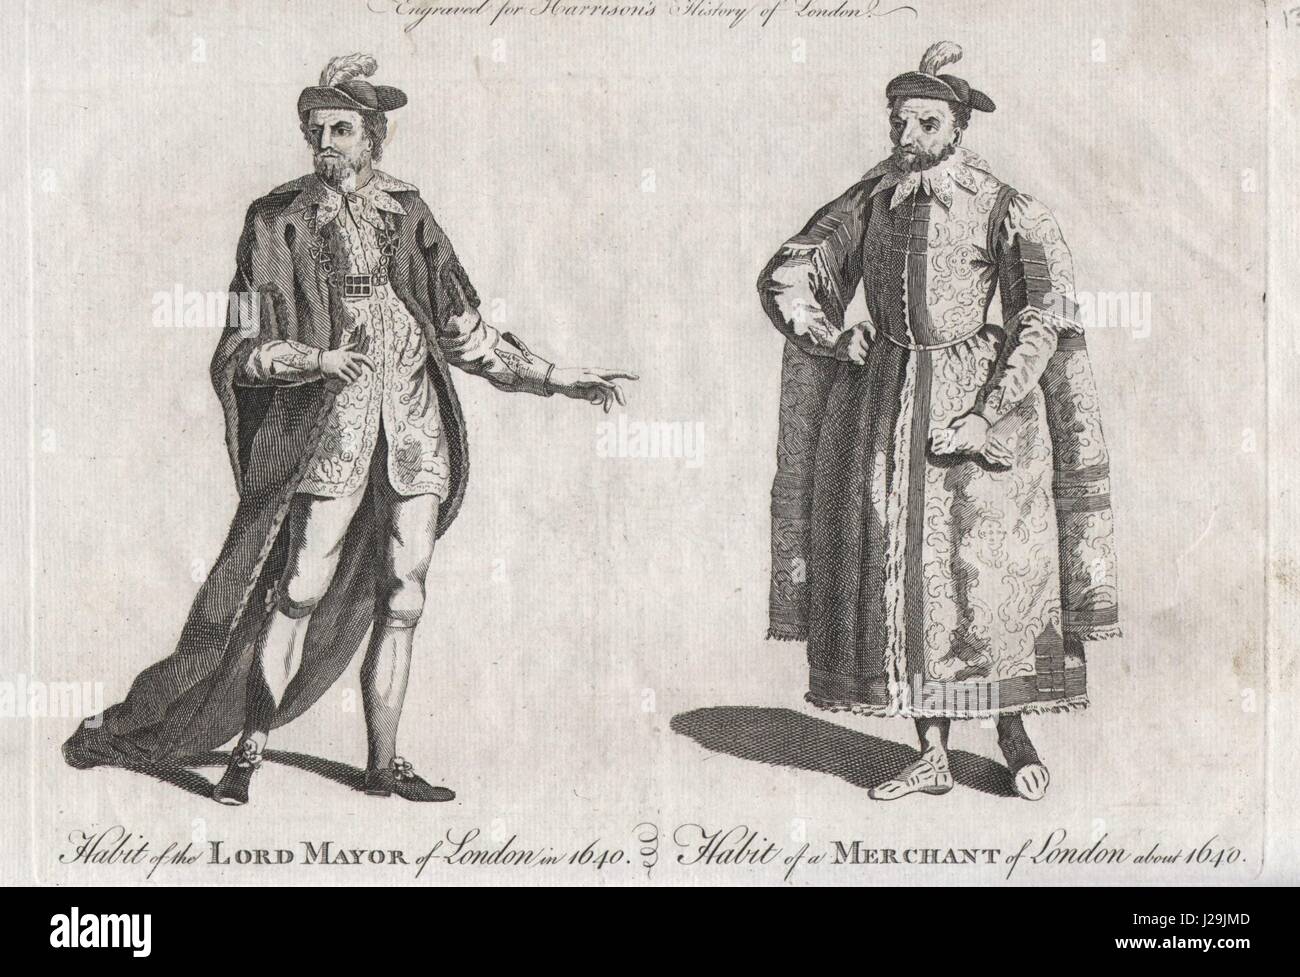 LONDON GENTLEMENS' COSTUMES 1640. Lord Mayor & Merchant habits. HARRISON 1776 Stock Photo